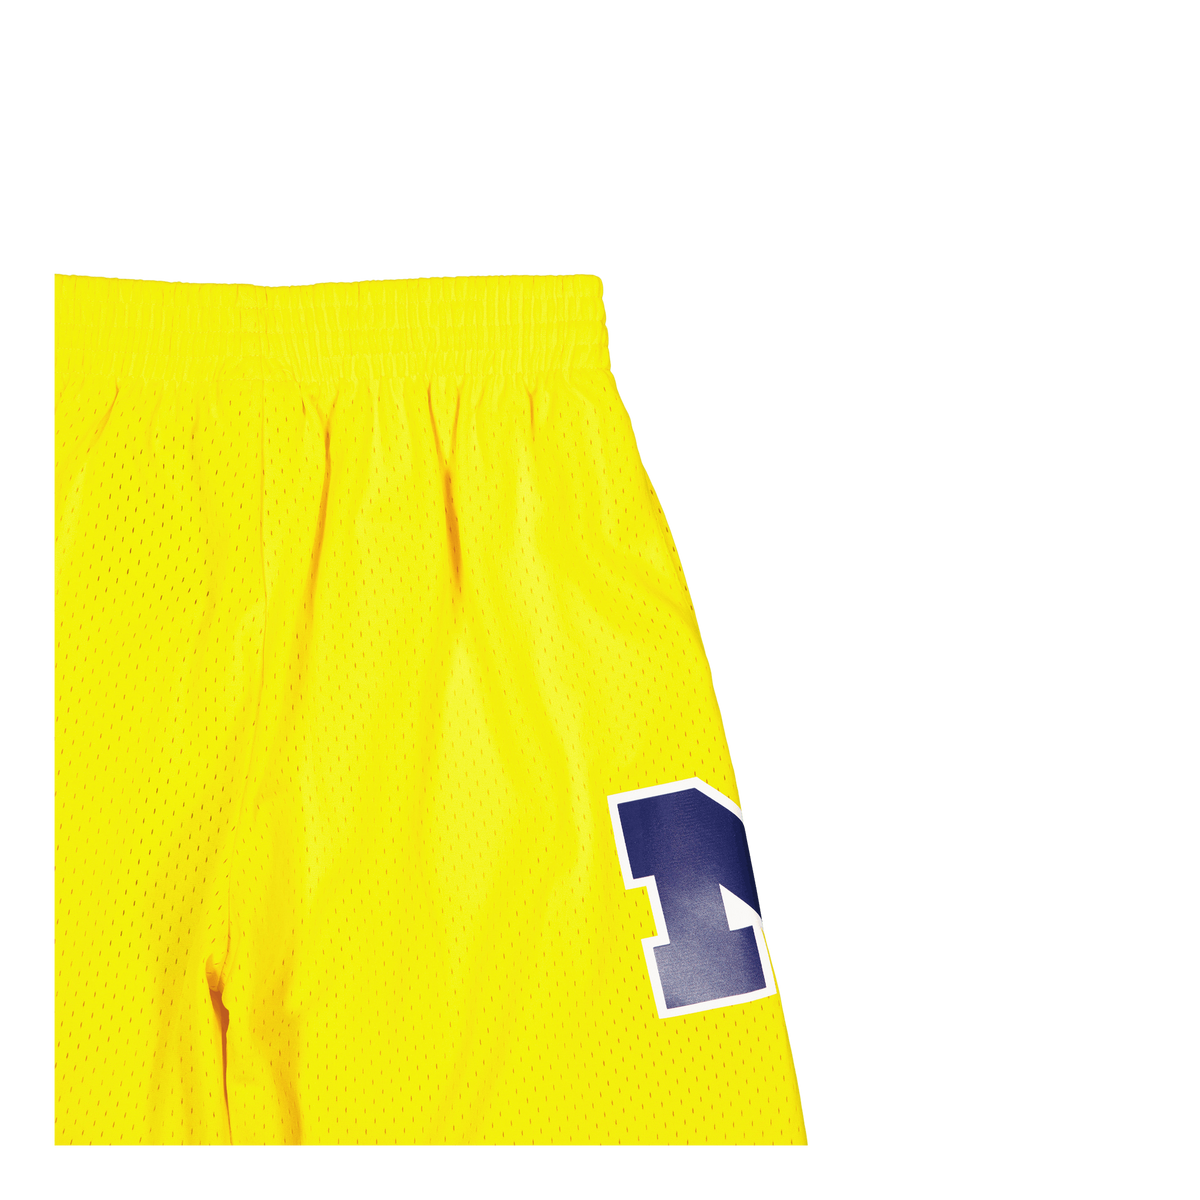 Wolverines Swingman Shorts Yellow